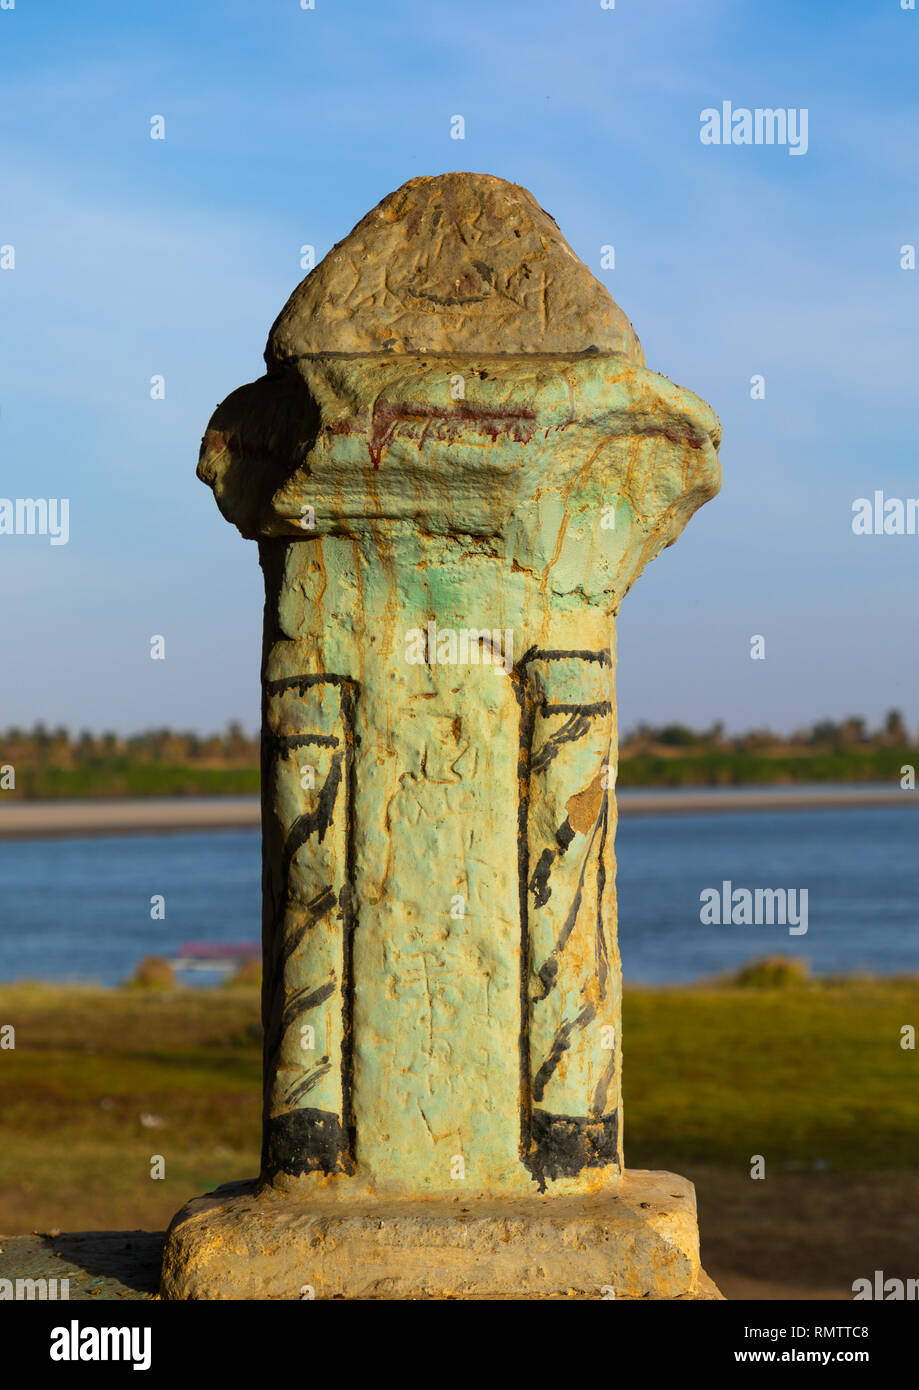 Old ottoman pilar, Stato settentrionale, Al-Khandaq, Sudan Foto Stock